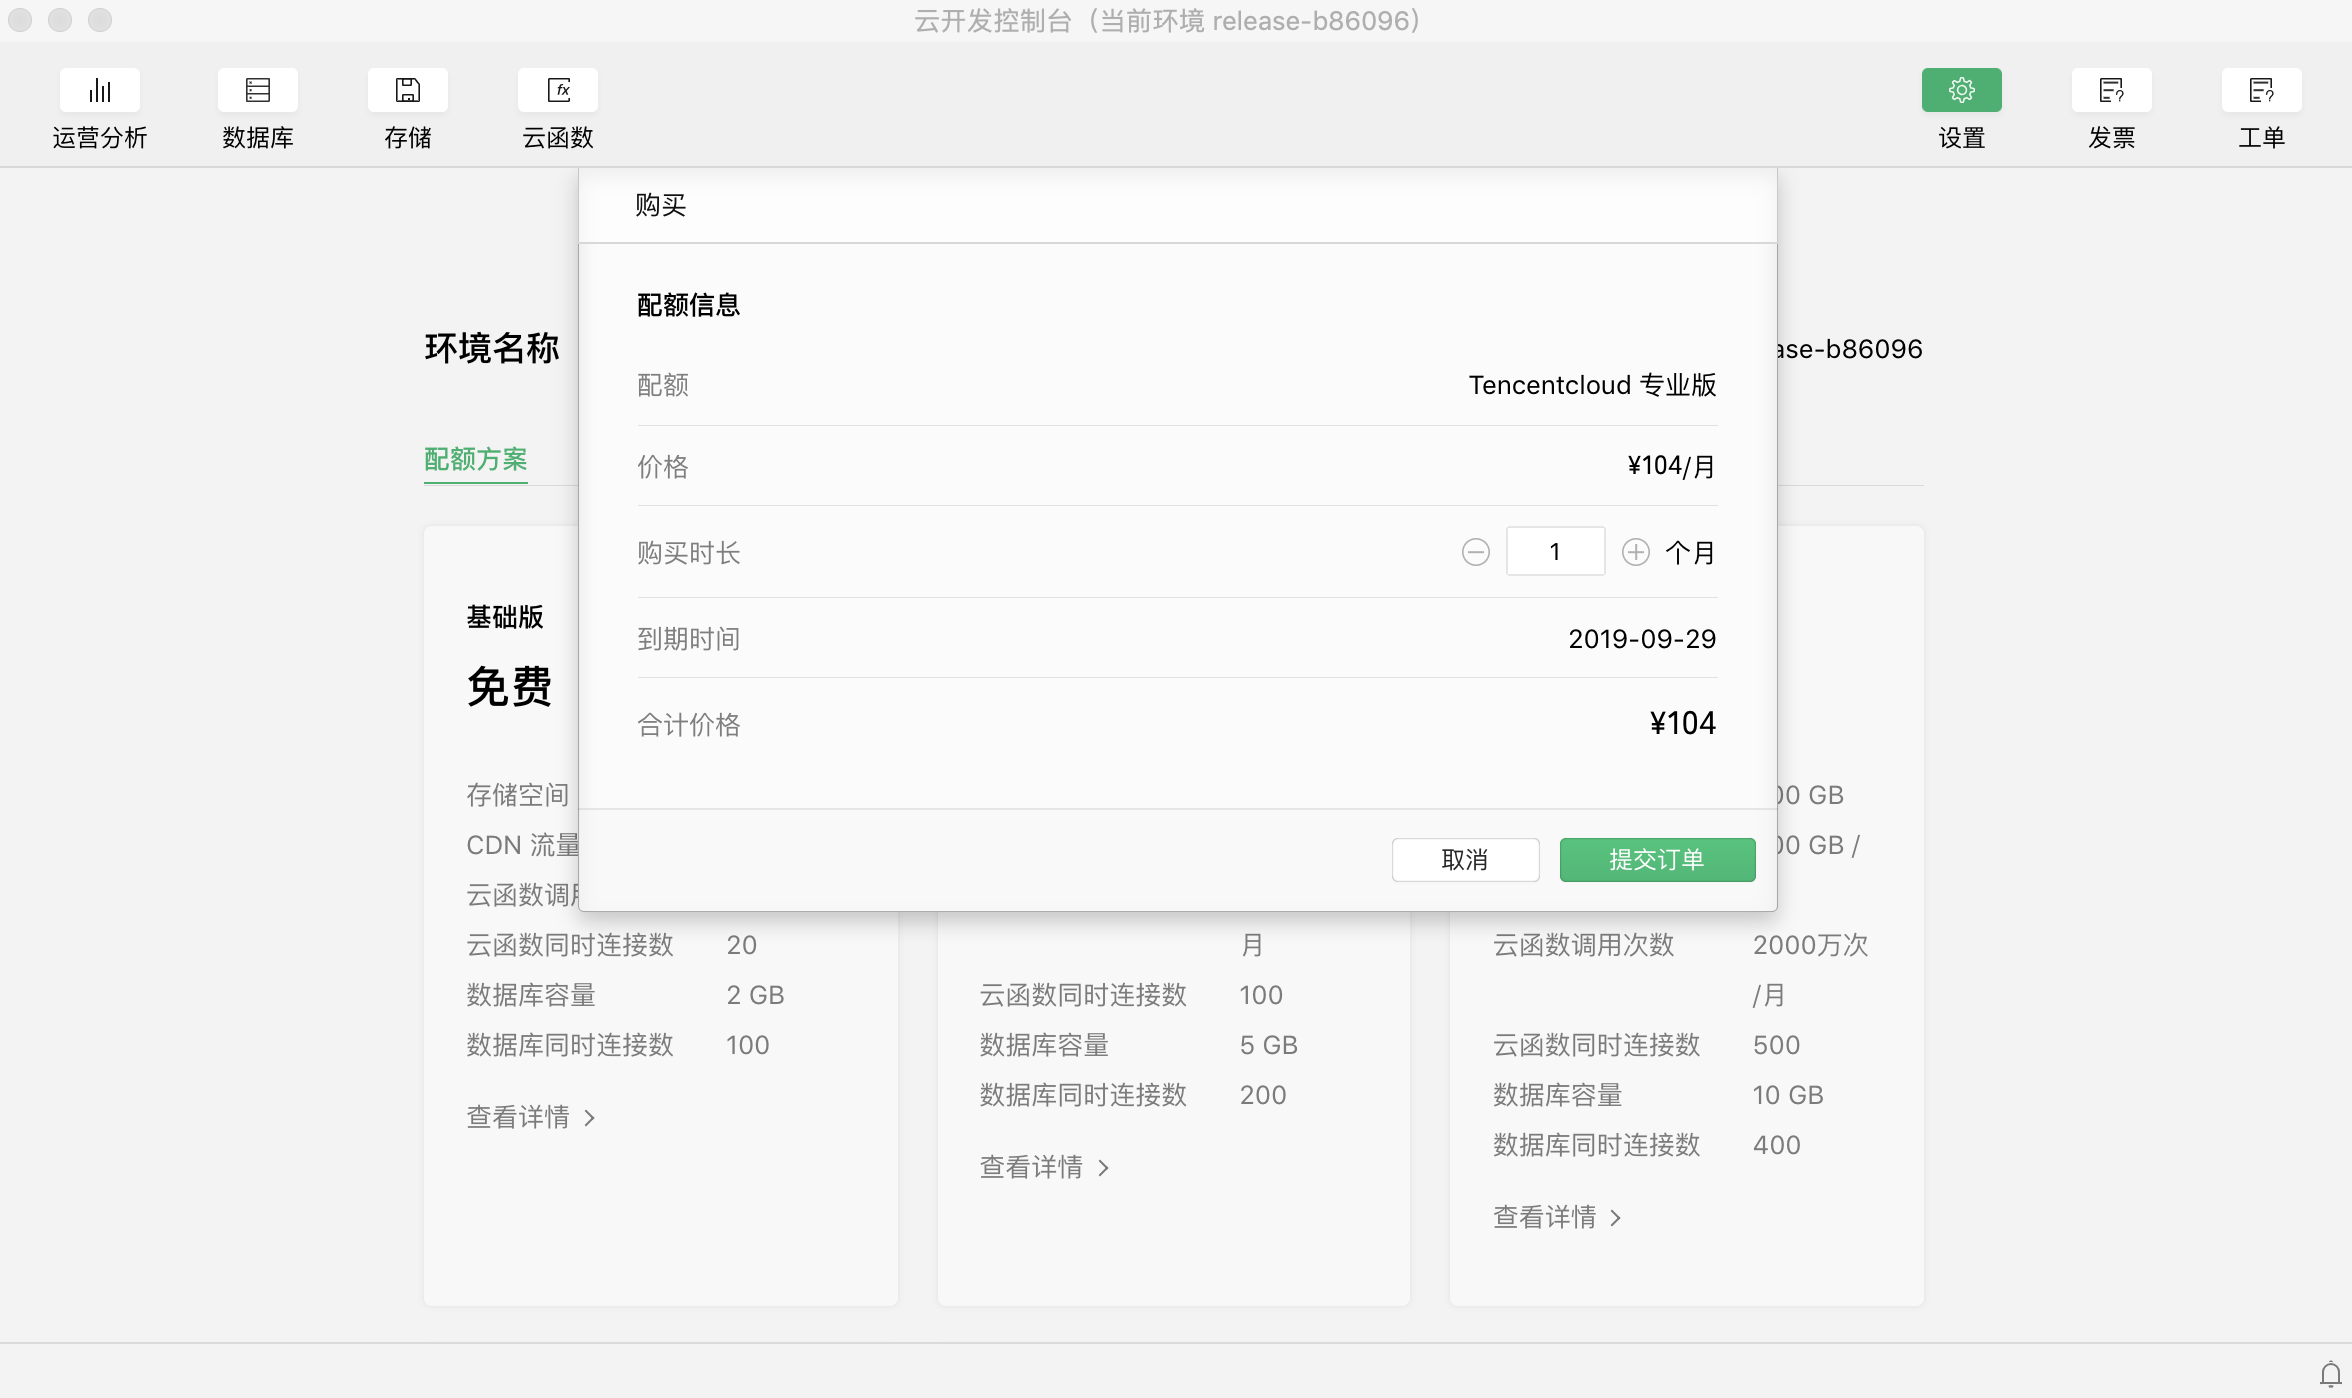 WeChat small program cloud development prepaid